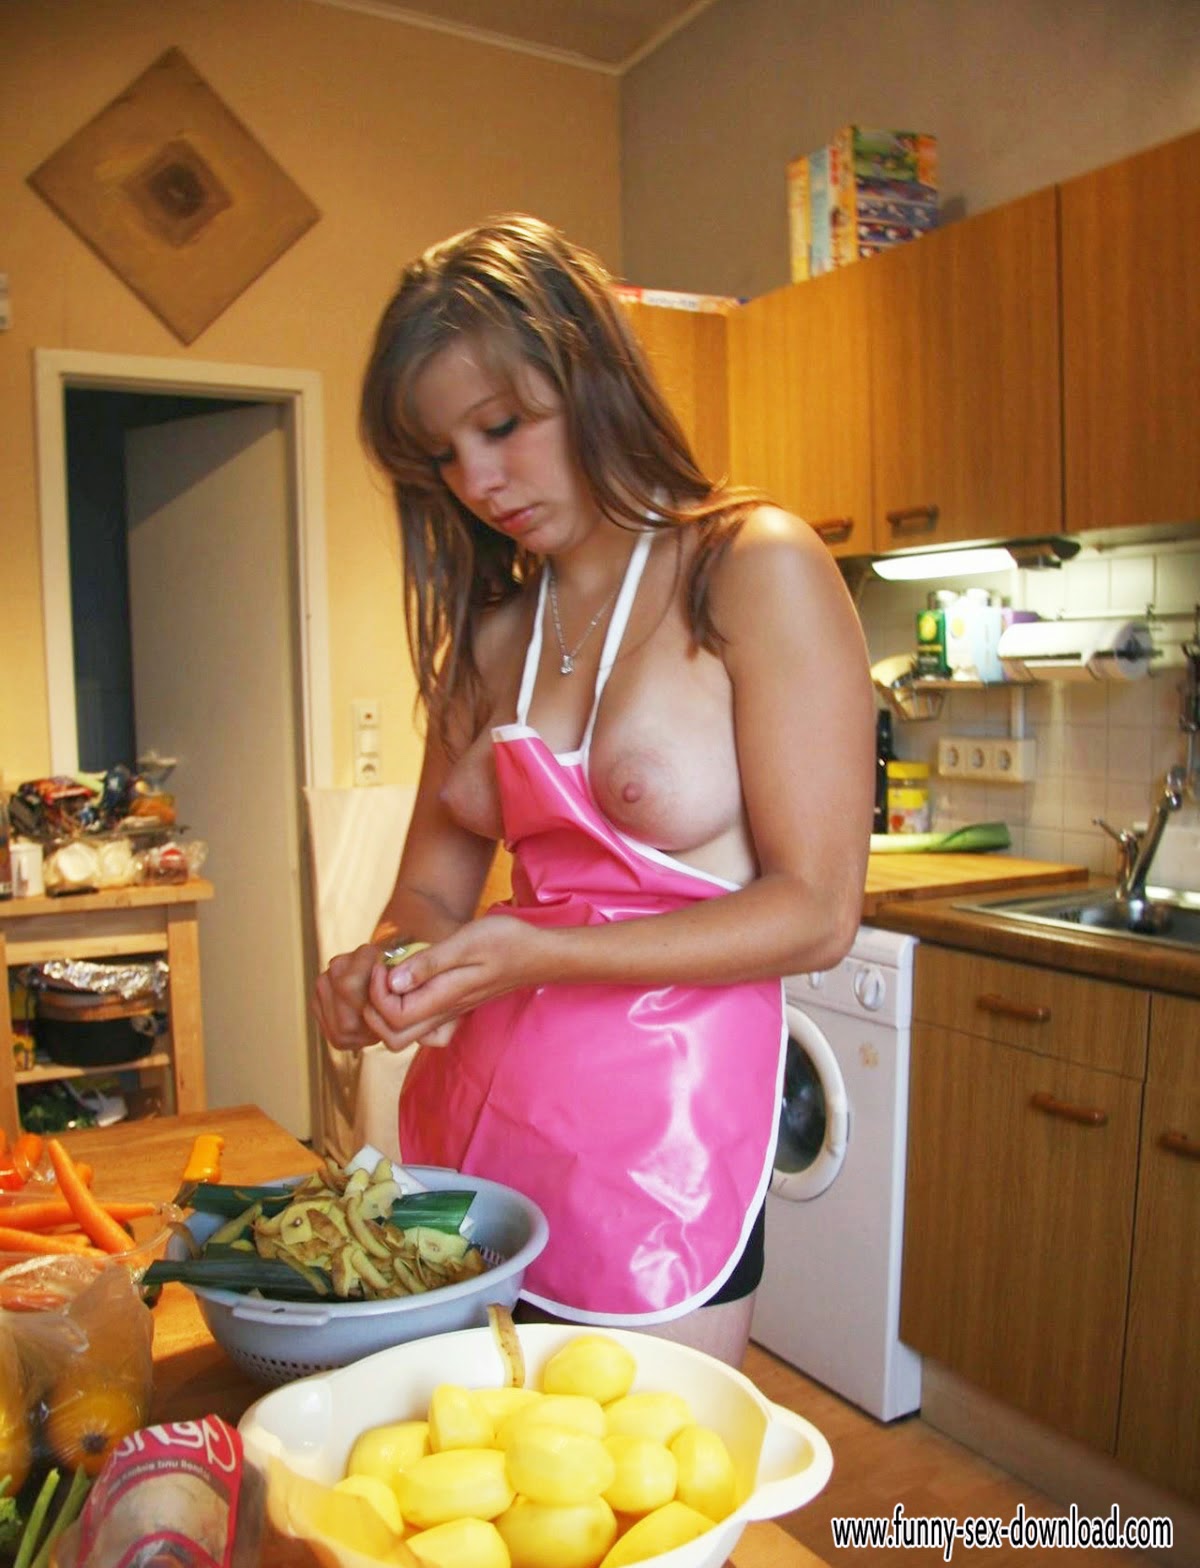 women having sex in the kitchen free pics